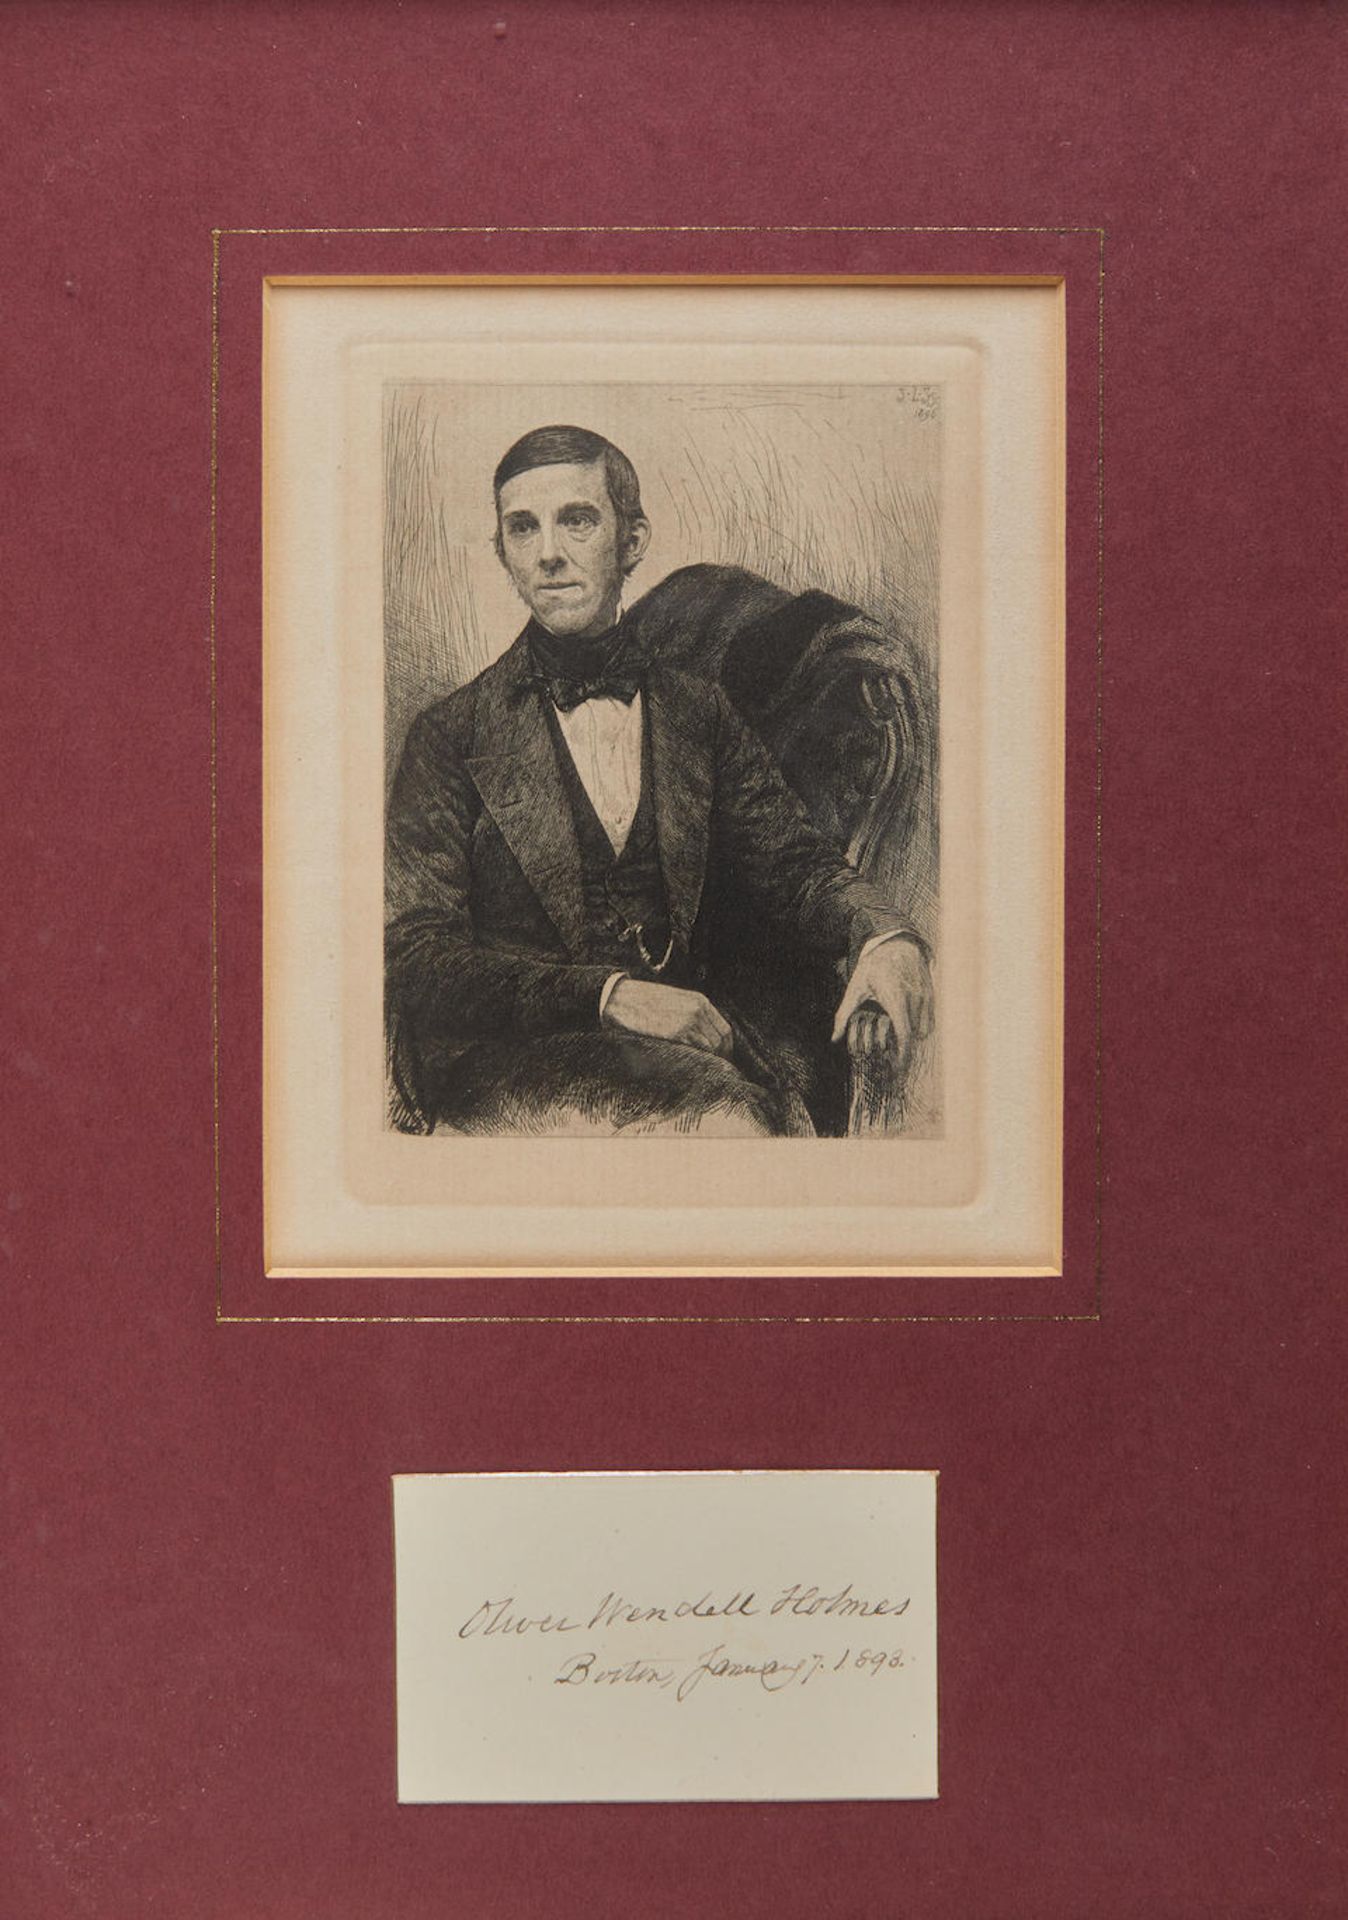 HOLMES, OLIVER WENDELL, (JR.). 1841-1925. Clipped Signature ('Oliver Wendell Holmes') on card,